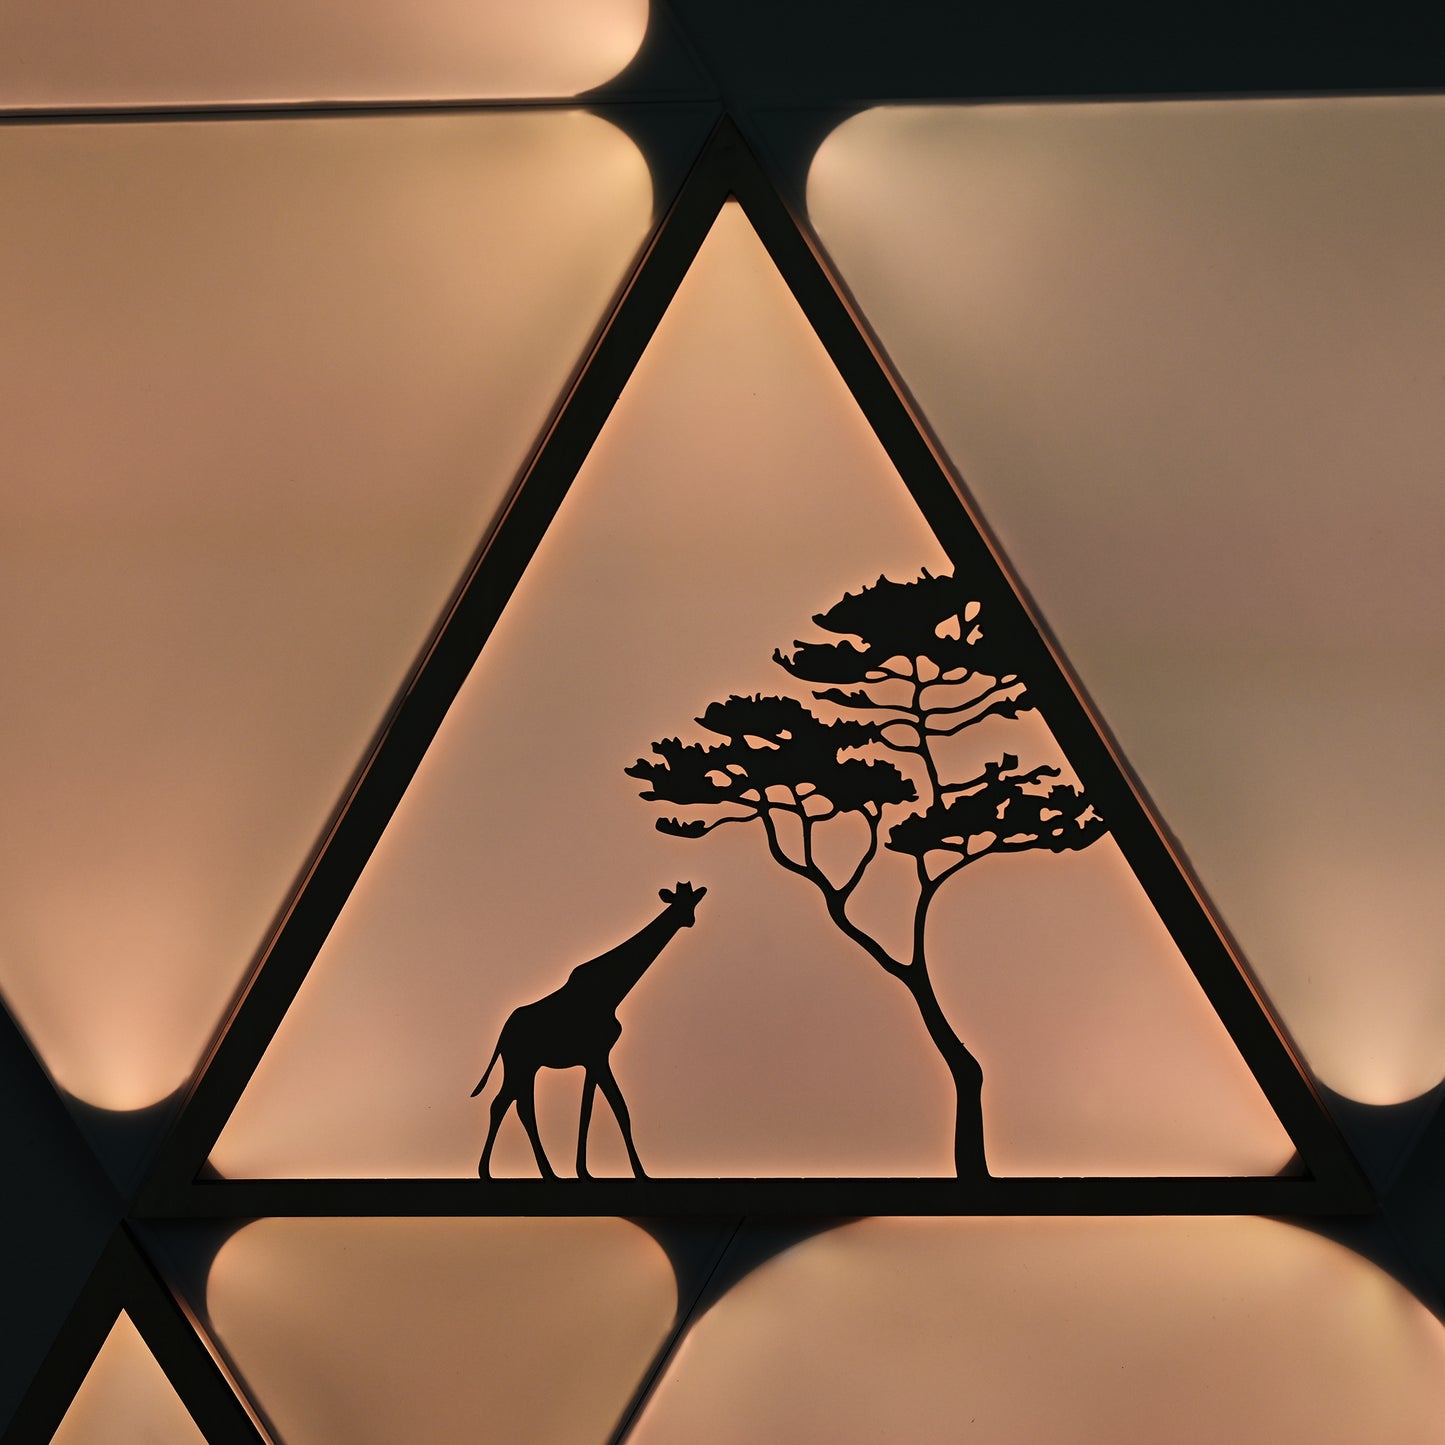 The Giraffes in Safari